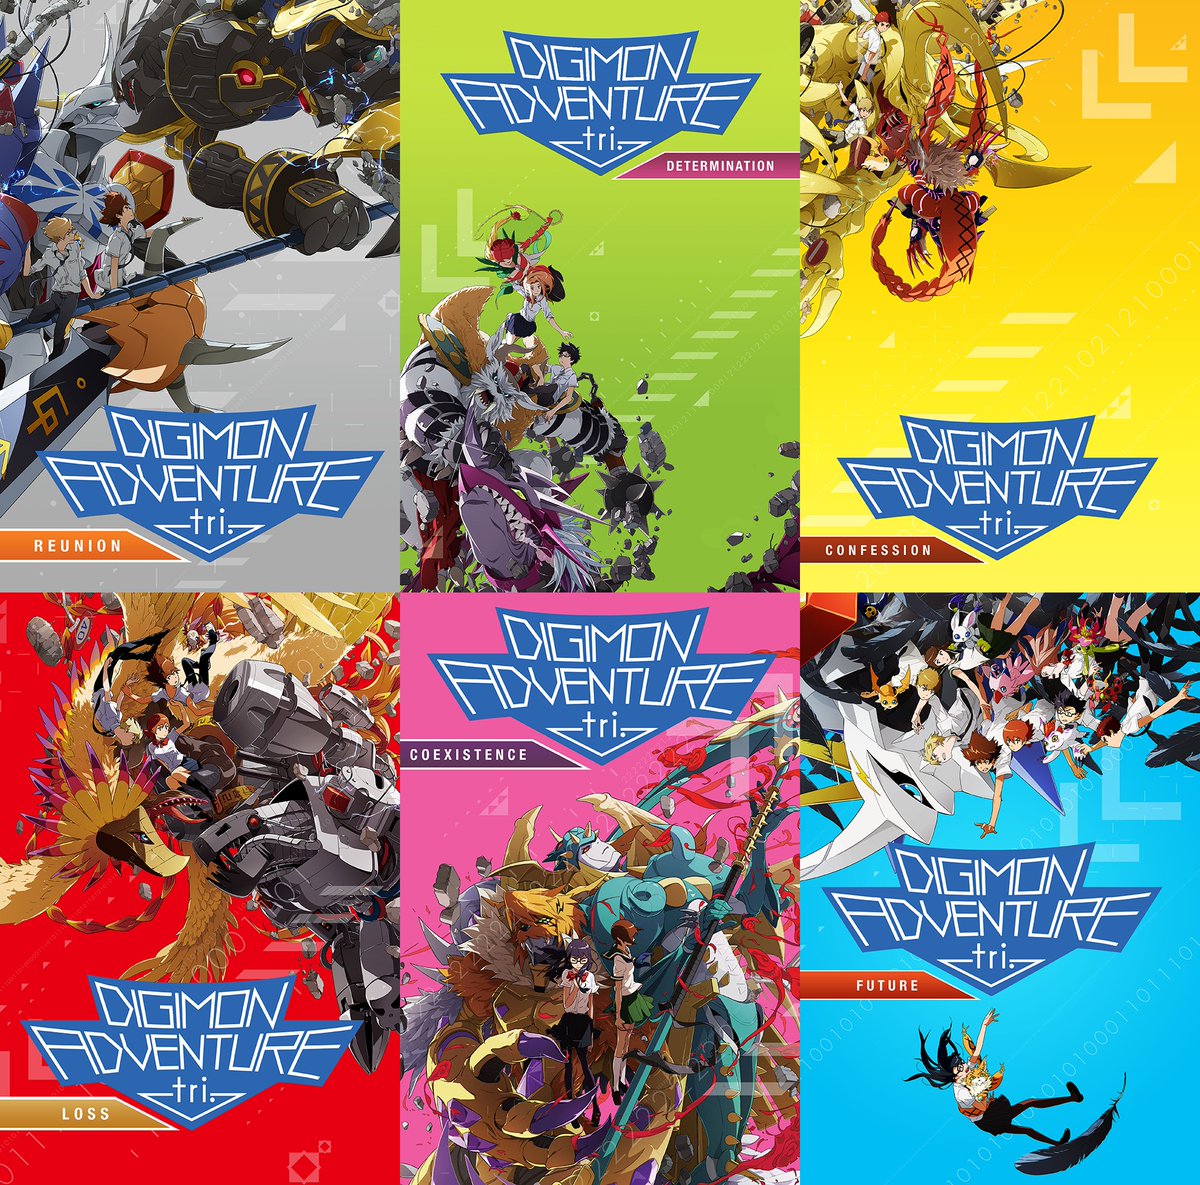 Digimon Adventure tri. (Films) em português brasileiro - Crunchyroll